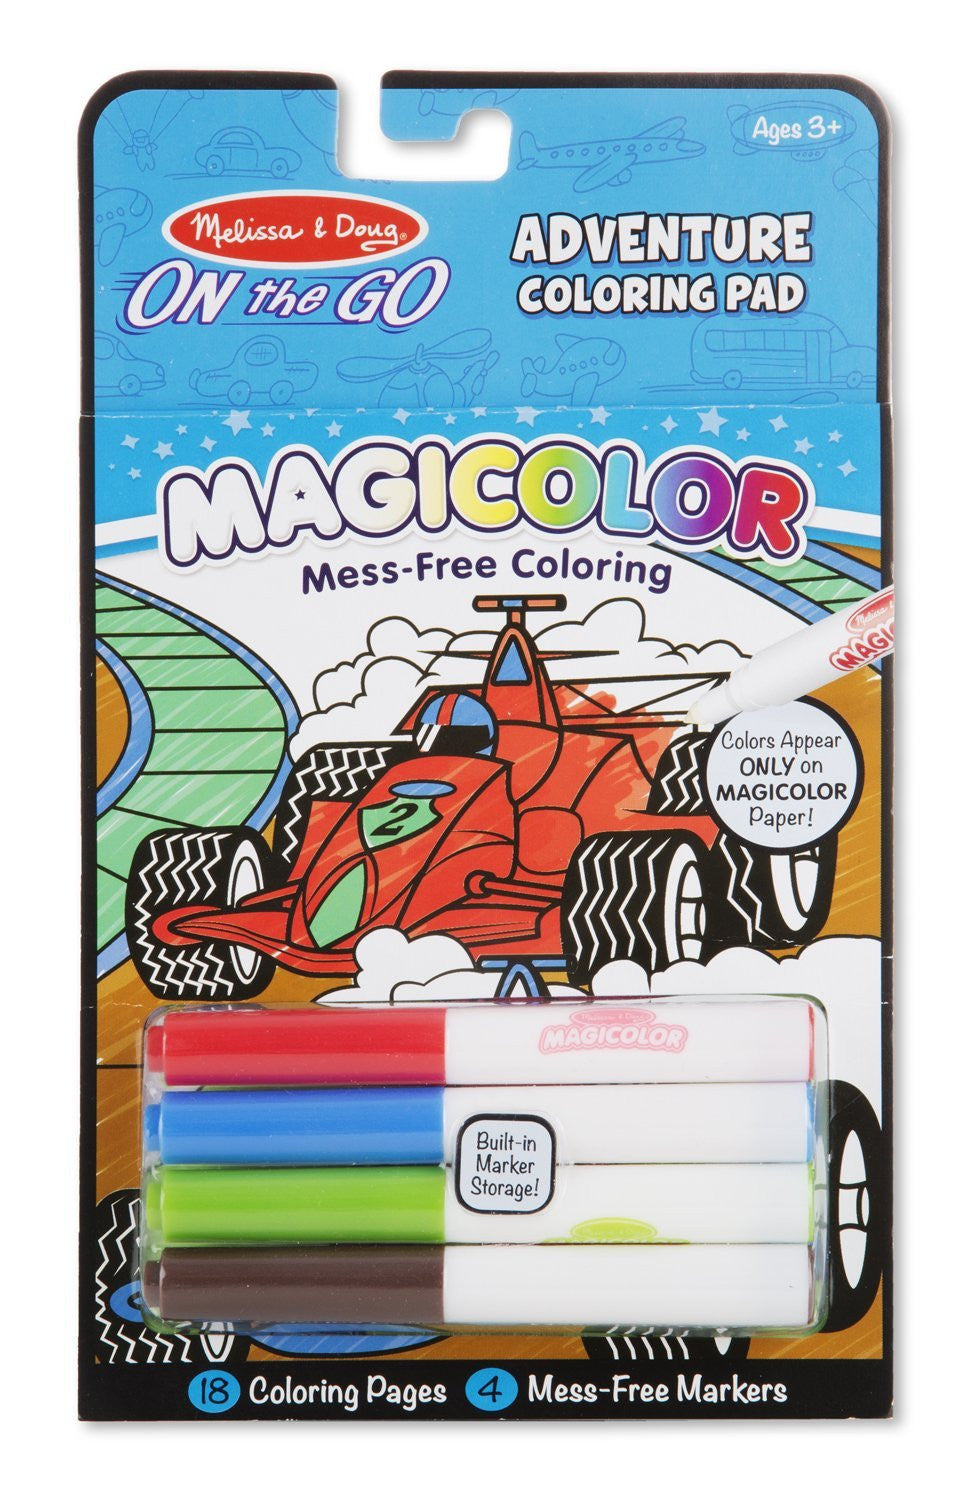 Games & Adventure Magicolor Coloring Pad